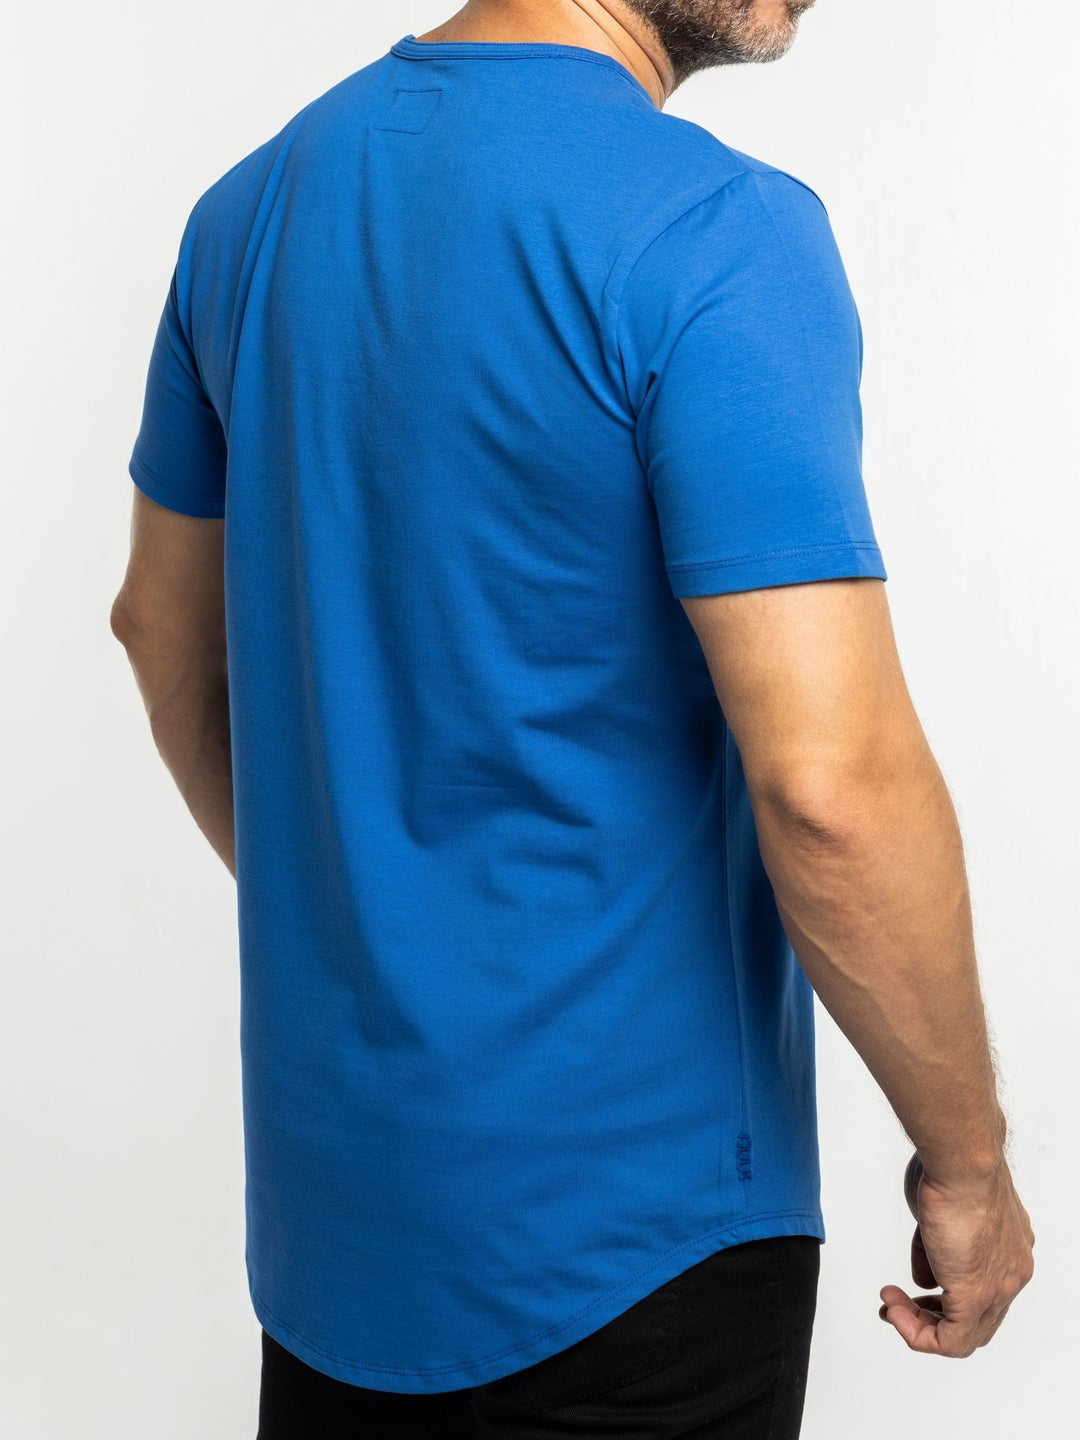 Zhivago x Nuuk Men T-shirt Blue Curved Hem T-Shirt: SLS Comfort